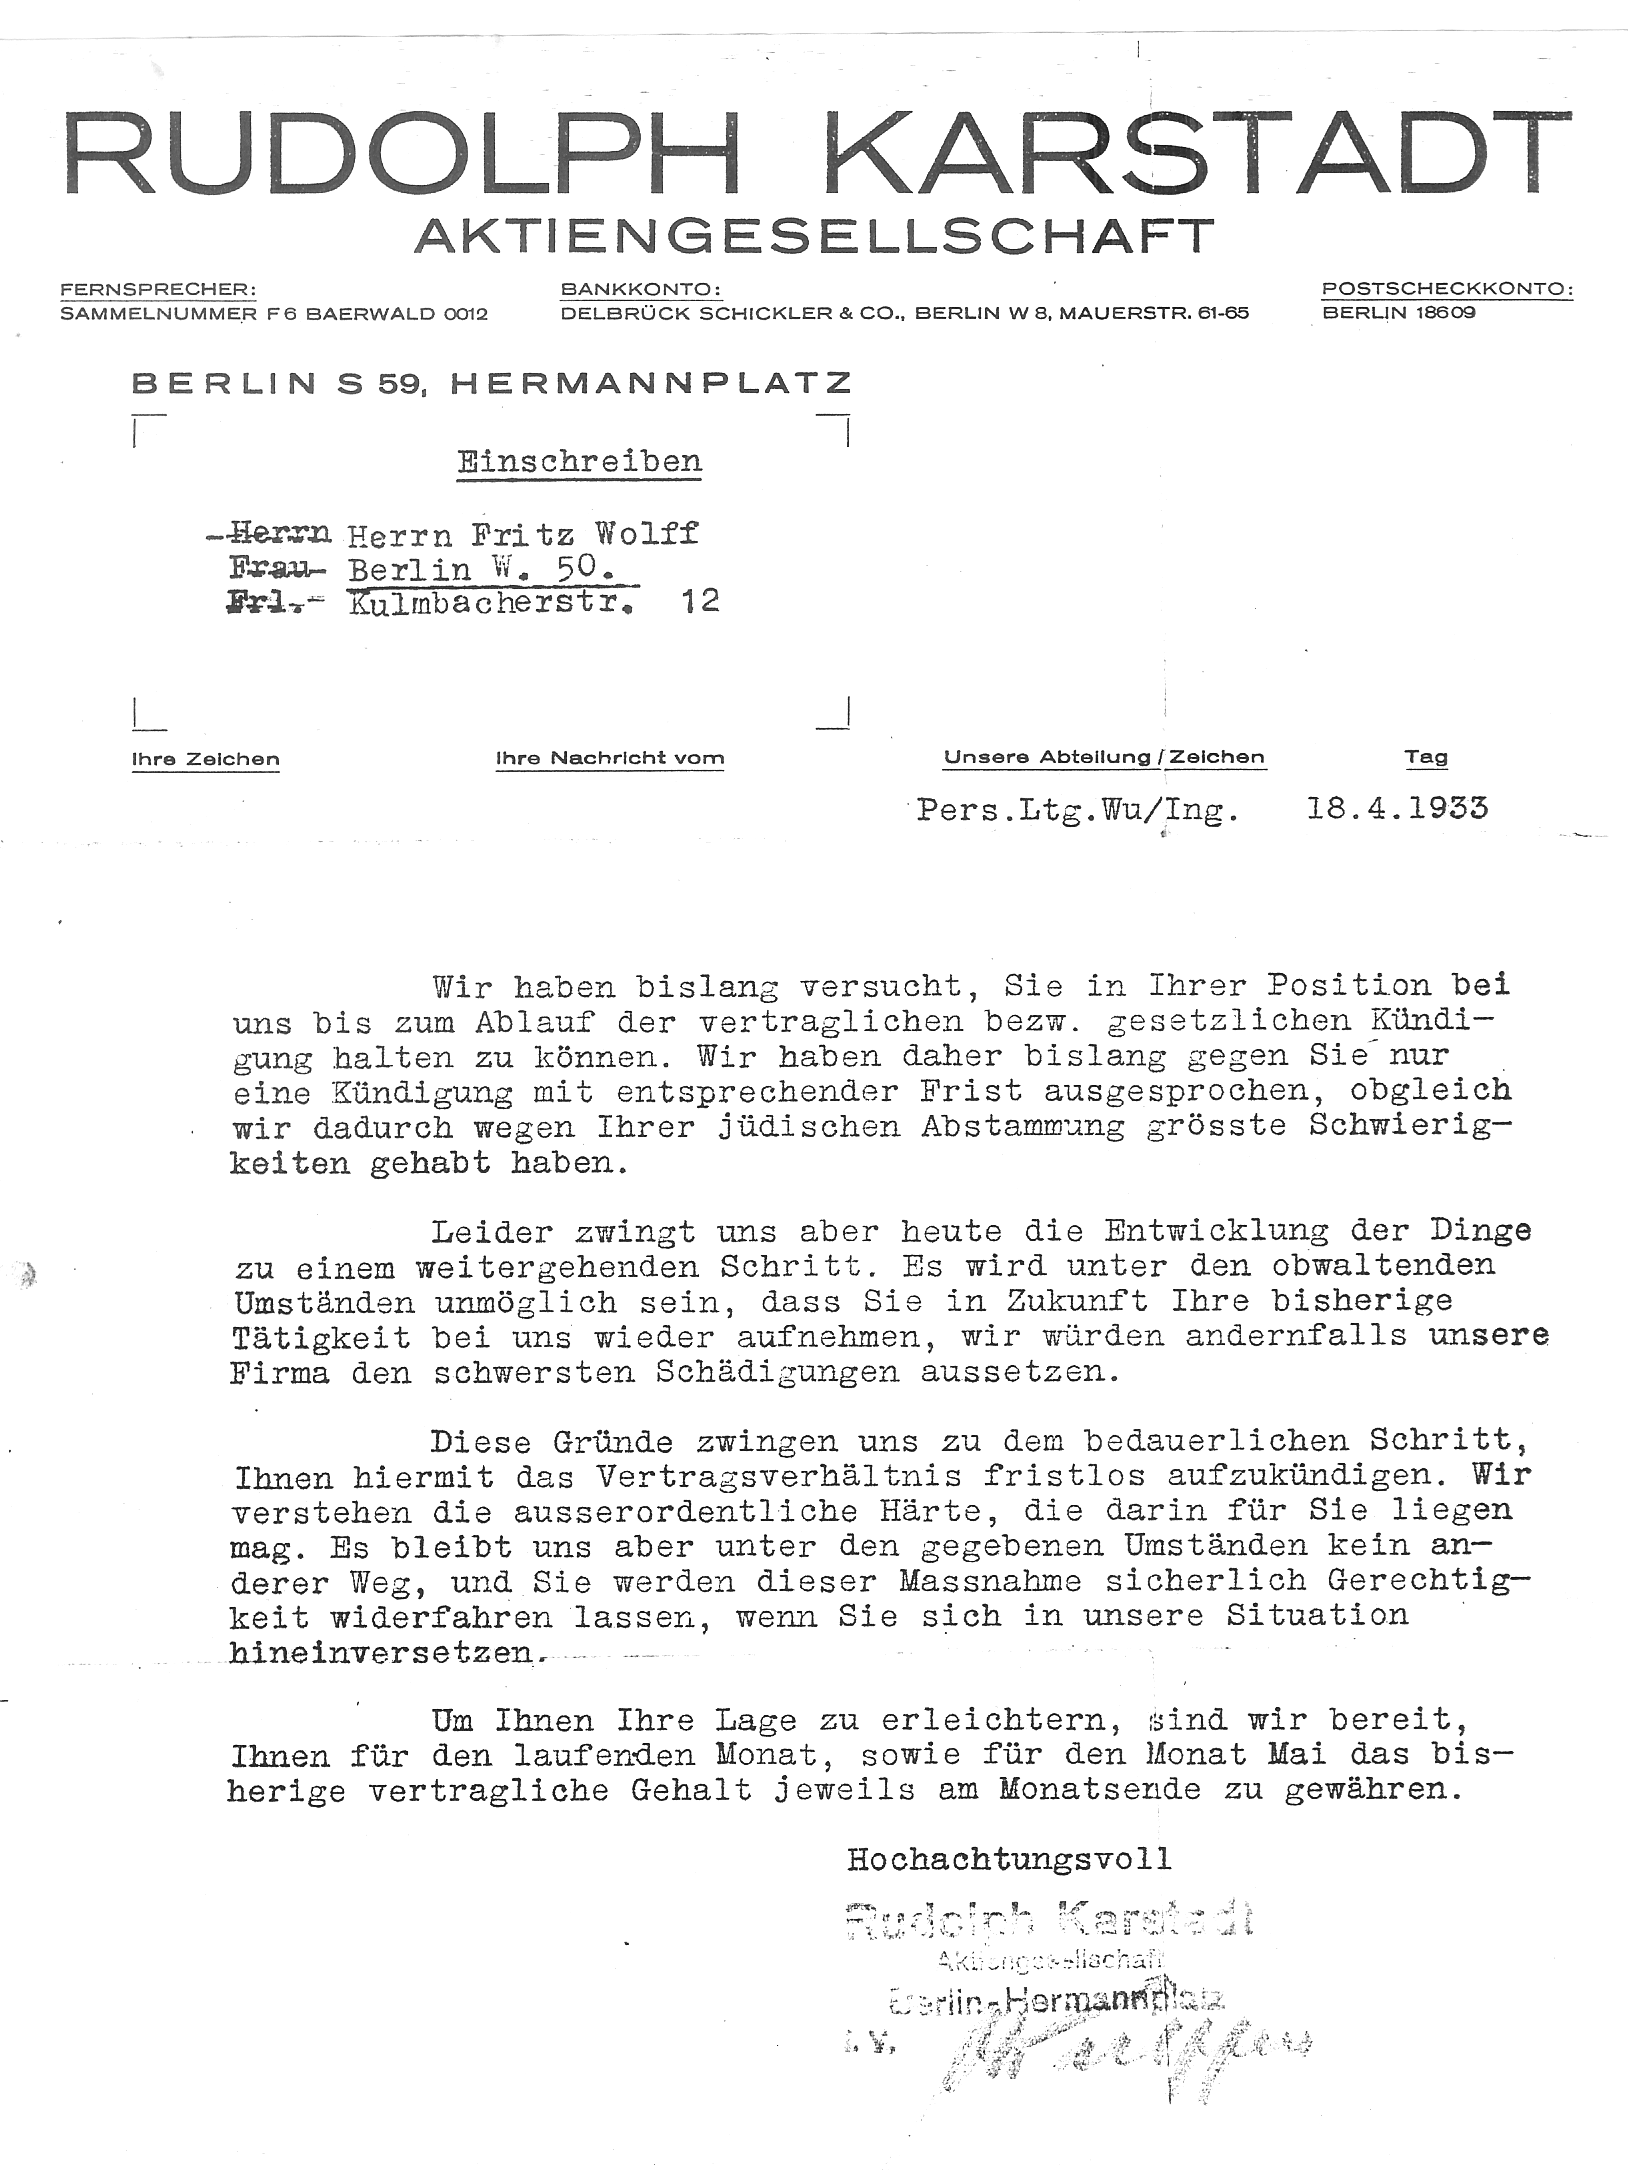 Click to Enlarge - dismissal Letter of Fritz Wolff by Karstadt 1933